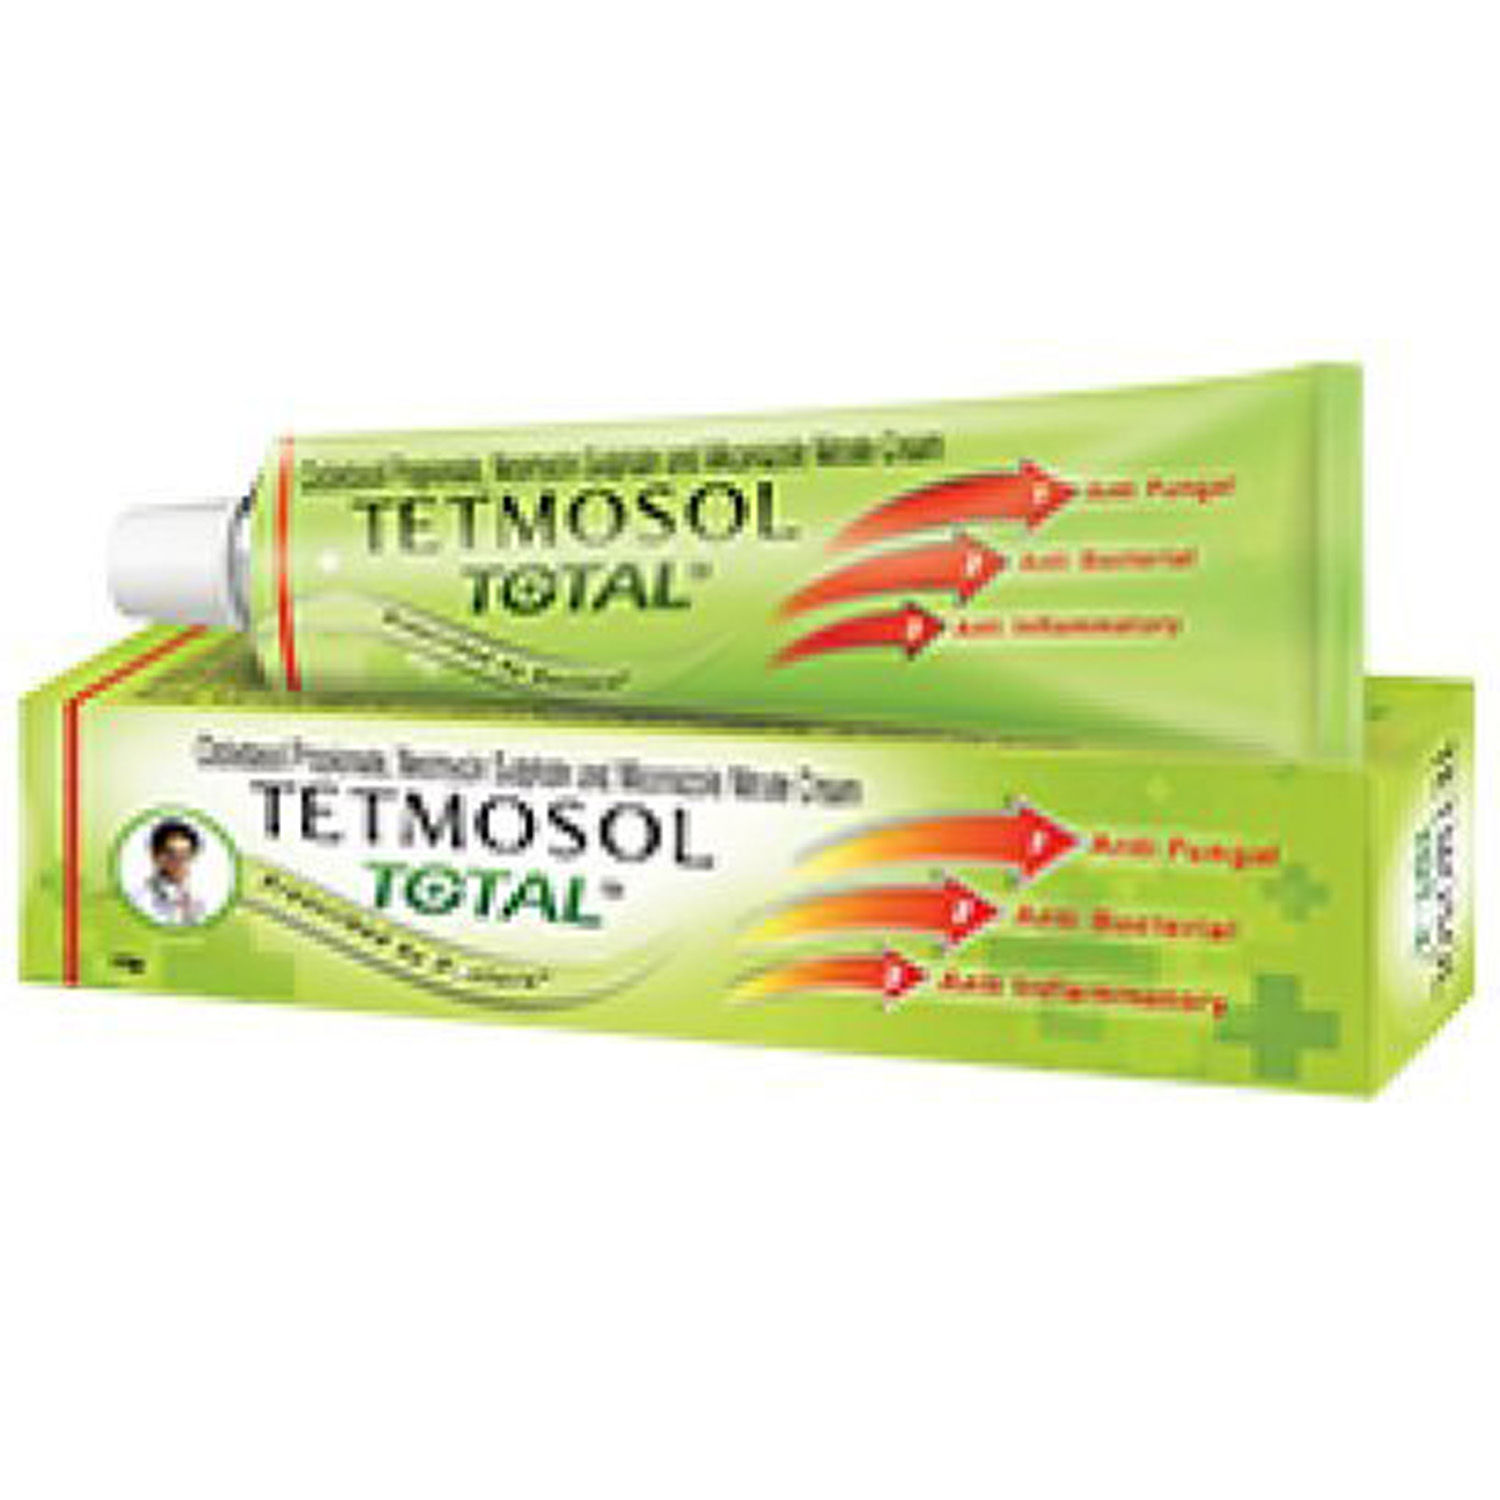 Buy Tetmosol Total Cream 15g Online